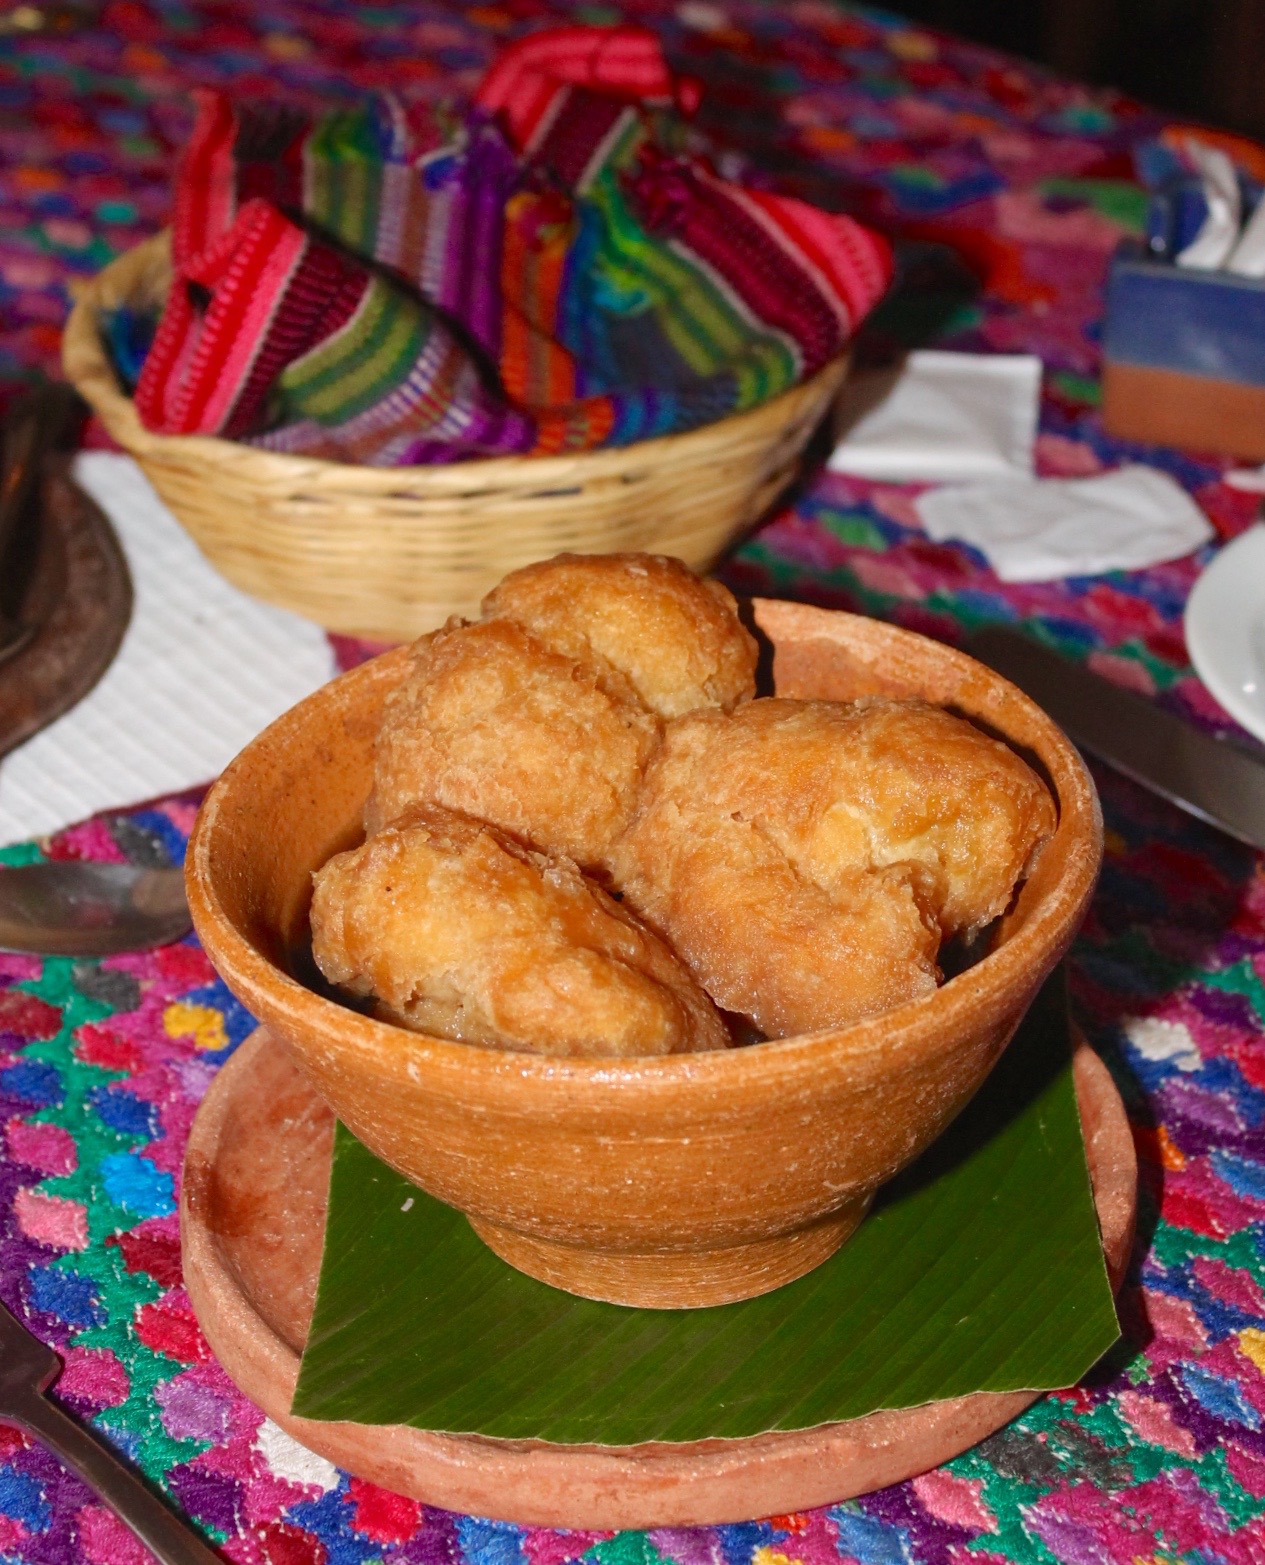 Buñuelos at Kacao restaurant in Guatemala City.